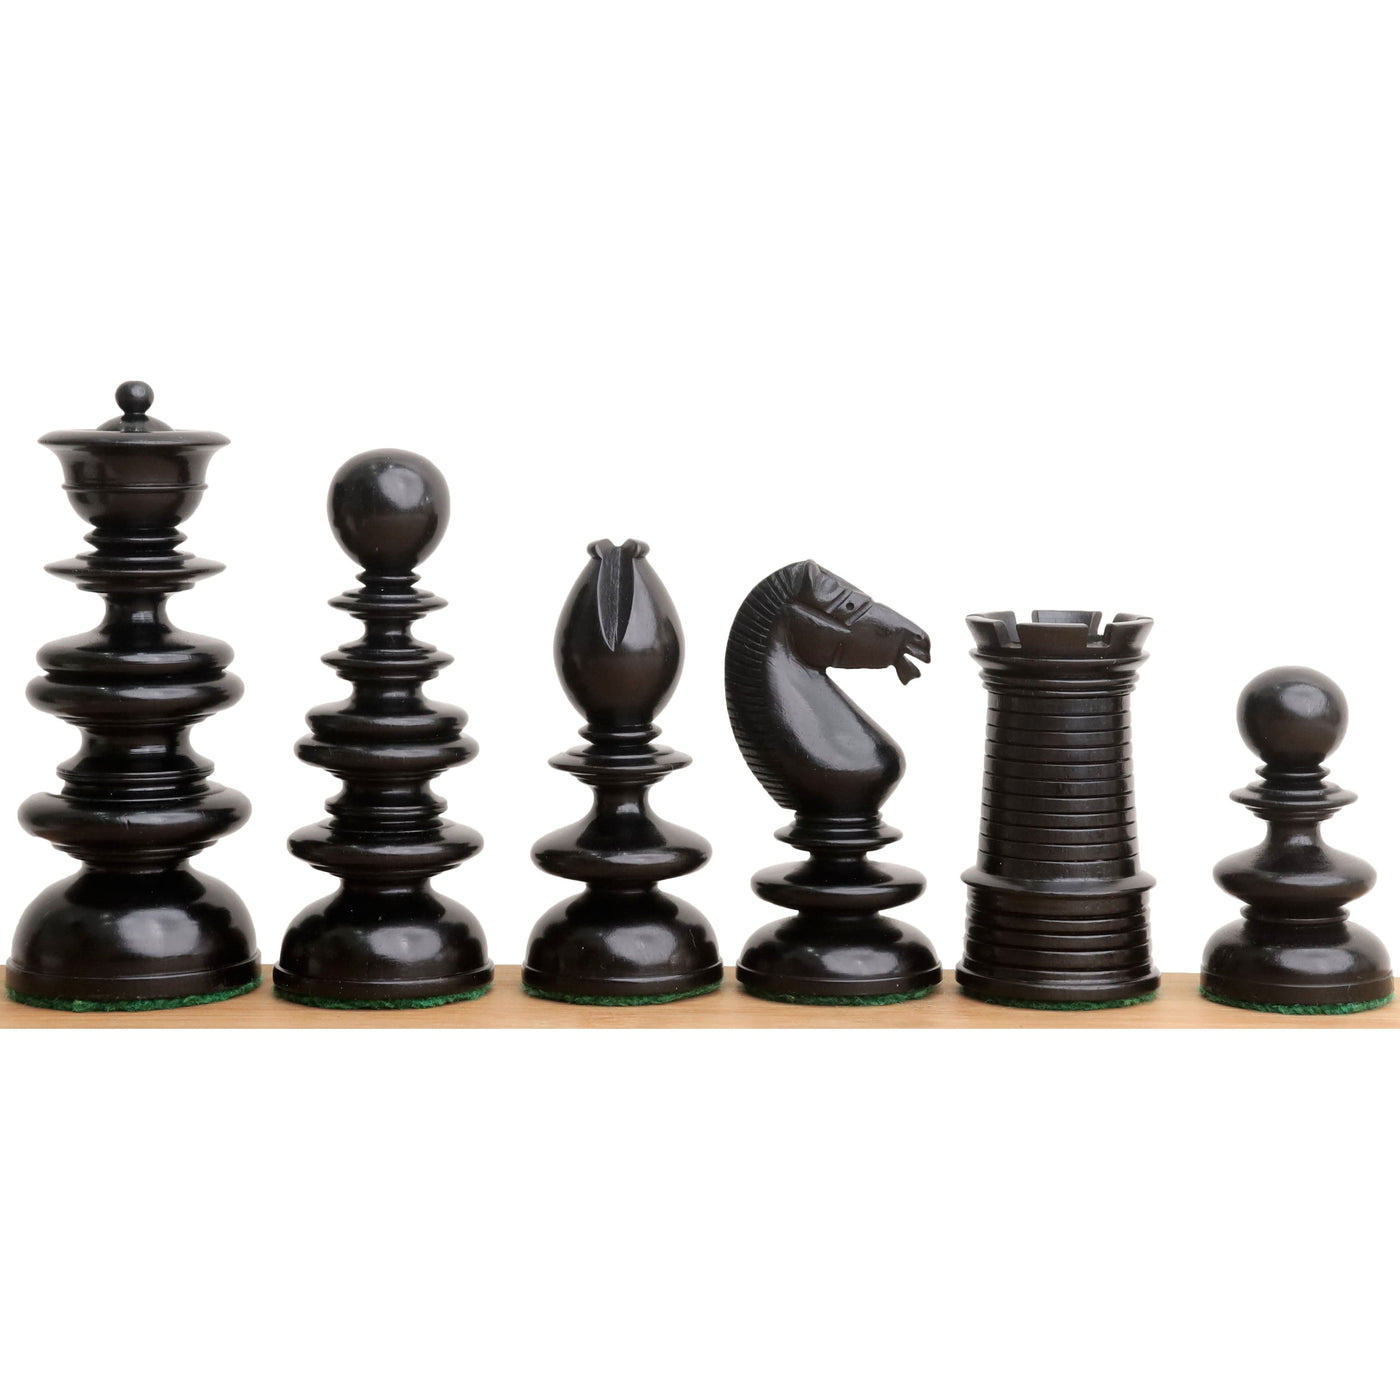 Slightly Imperfect 3.3" St. John Pre-Staunton Calvert Chess Set - Chess Pieces Only - Ebony Wood & Antique